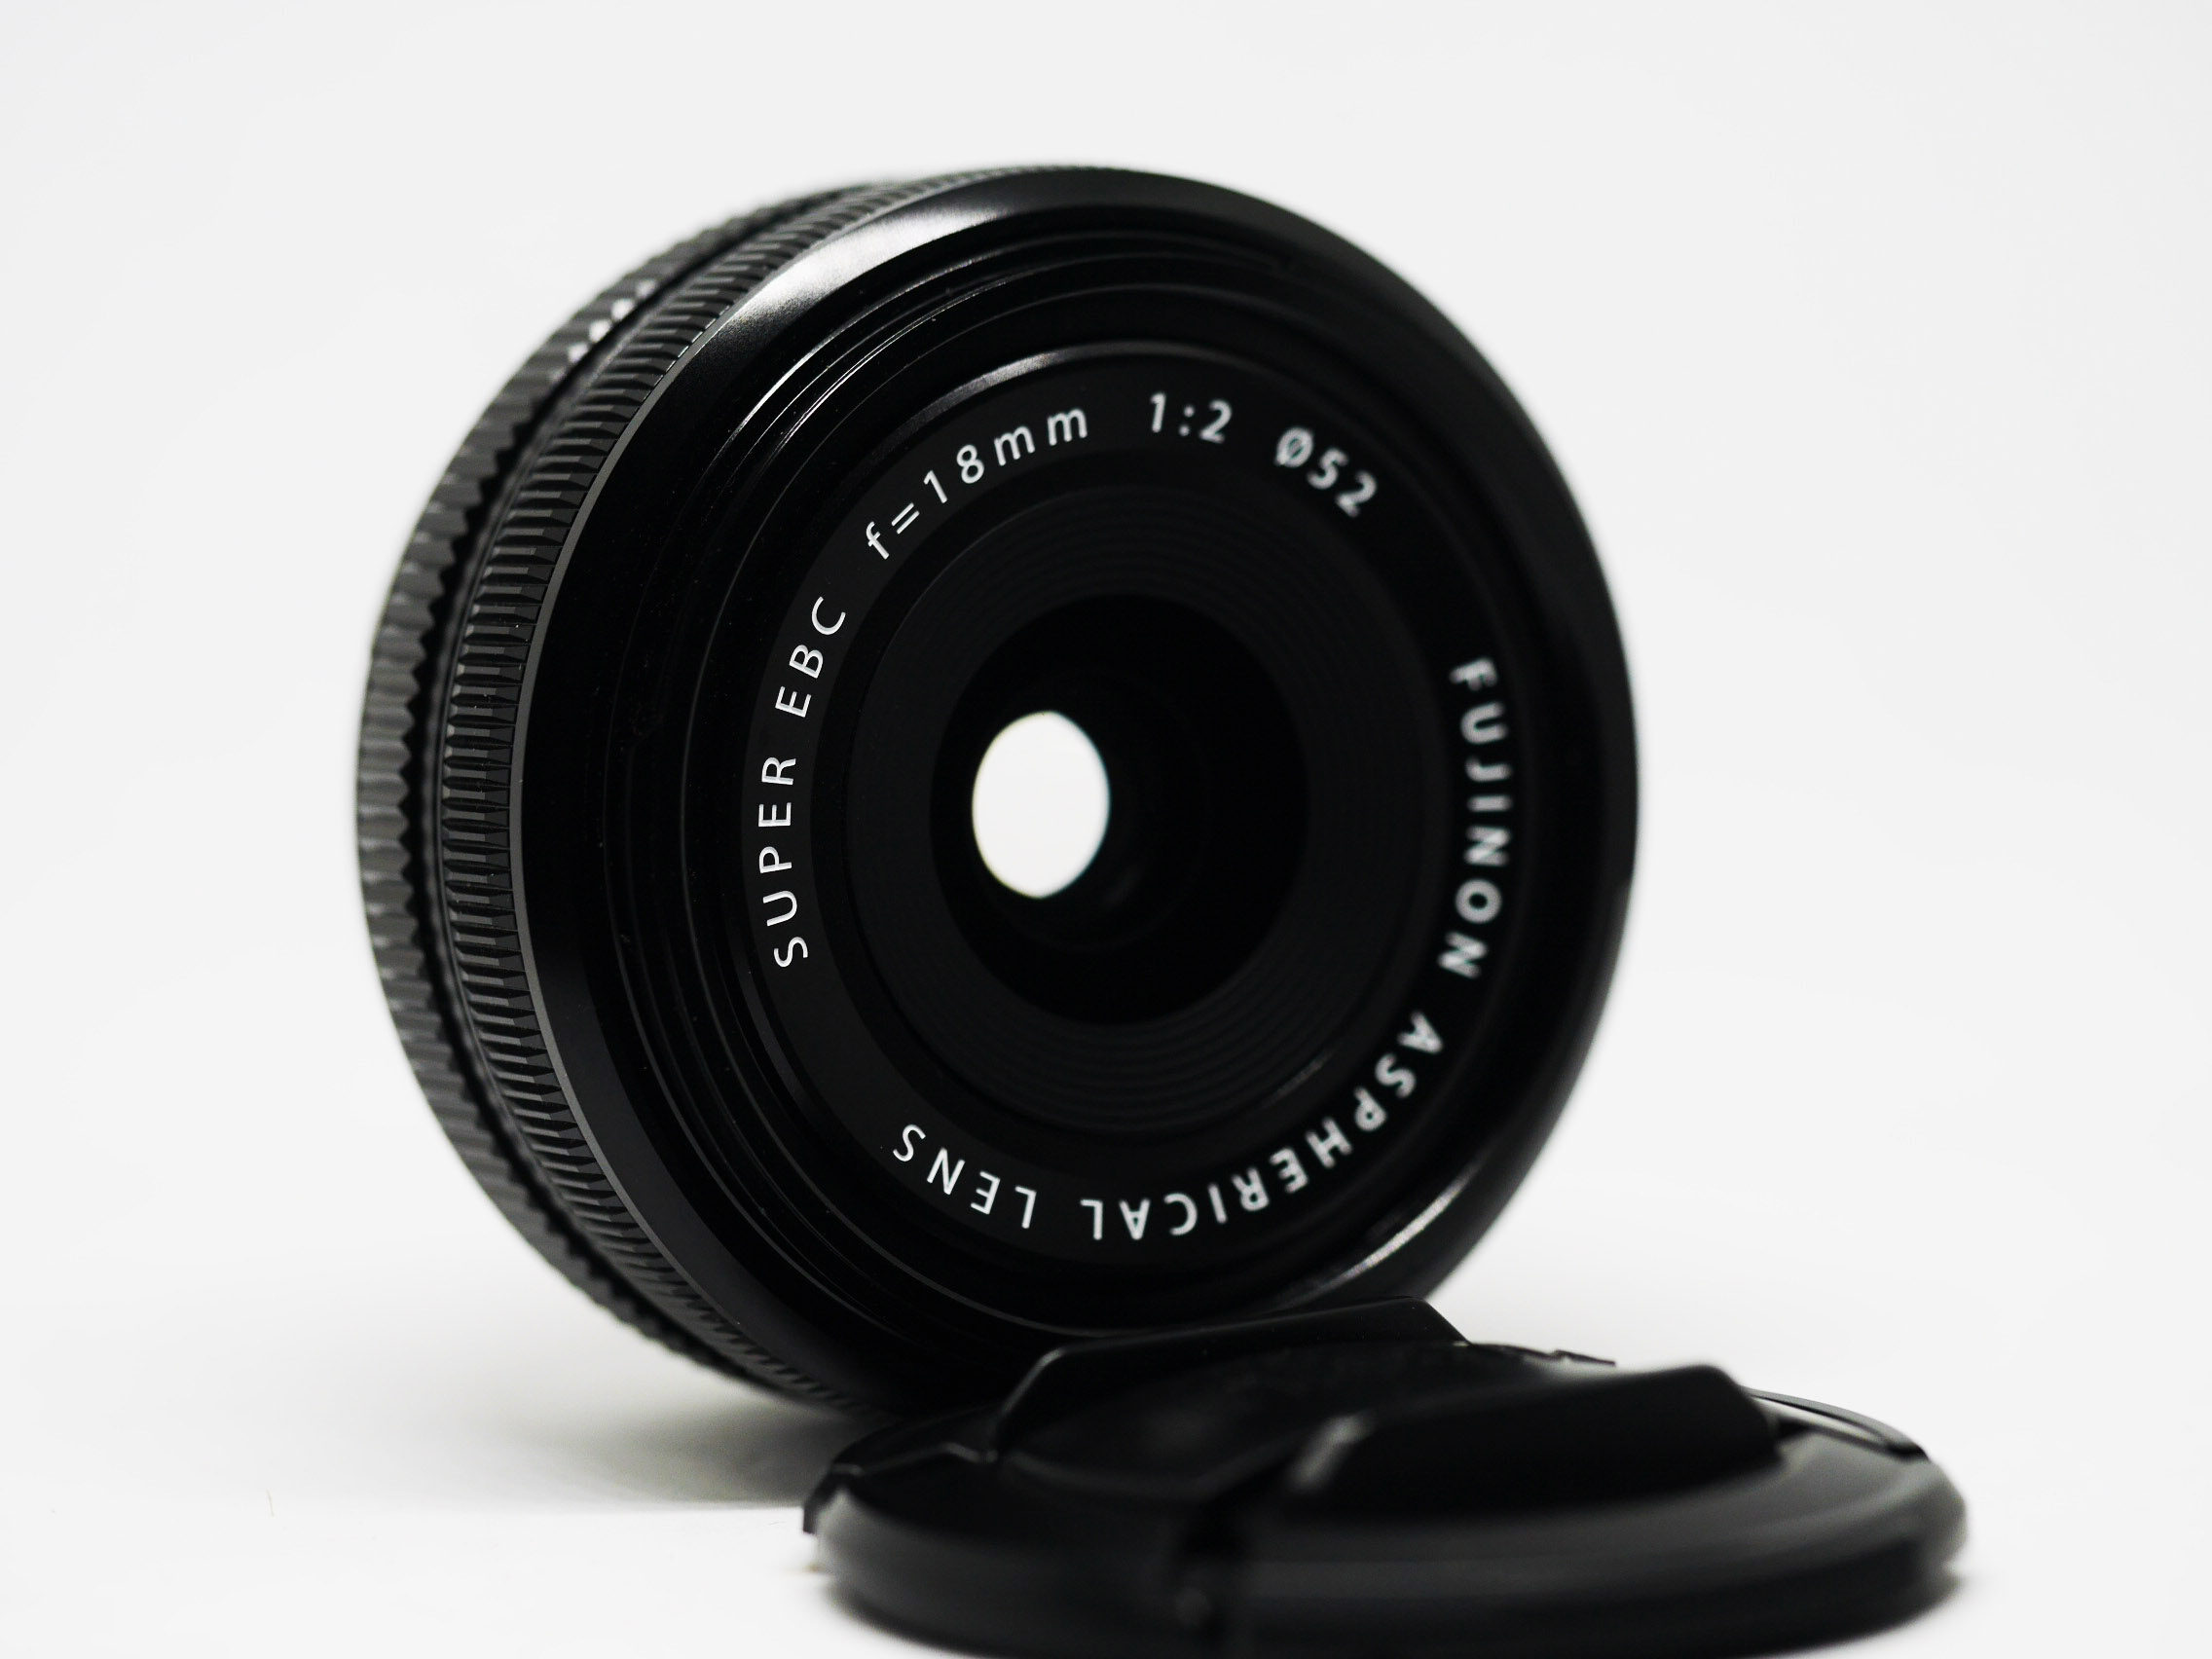 FUJIFILM Fujinon XF 18mm F/2 R Lens for X Mount Cameras, Fuji 18mm f2.0, 18mm F2